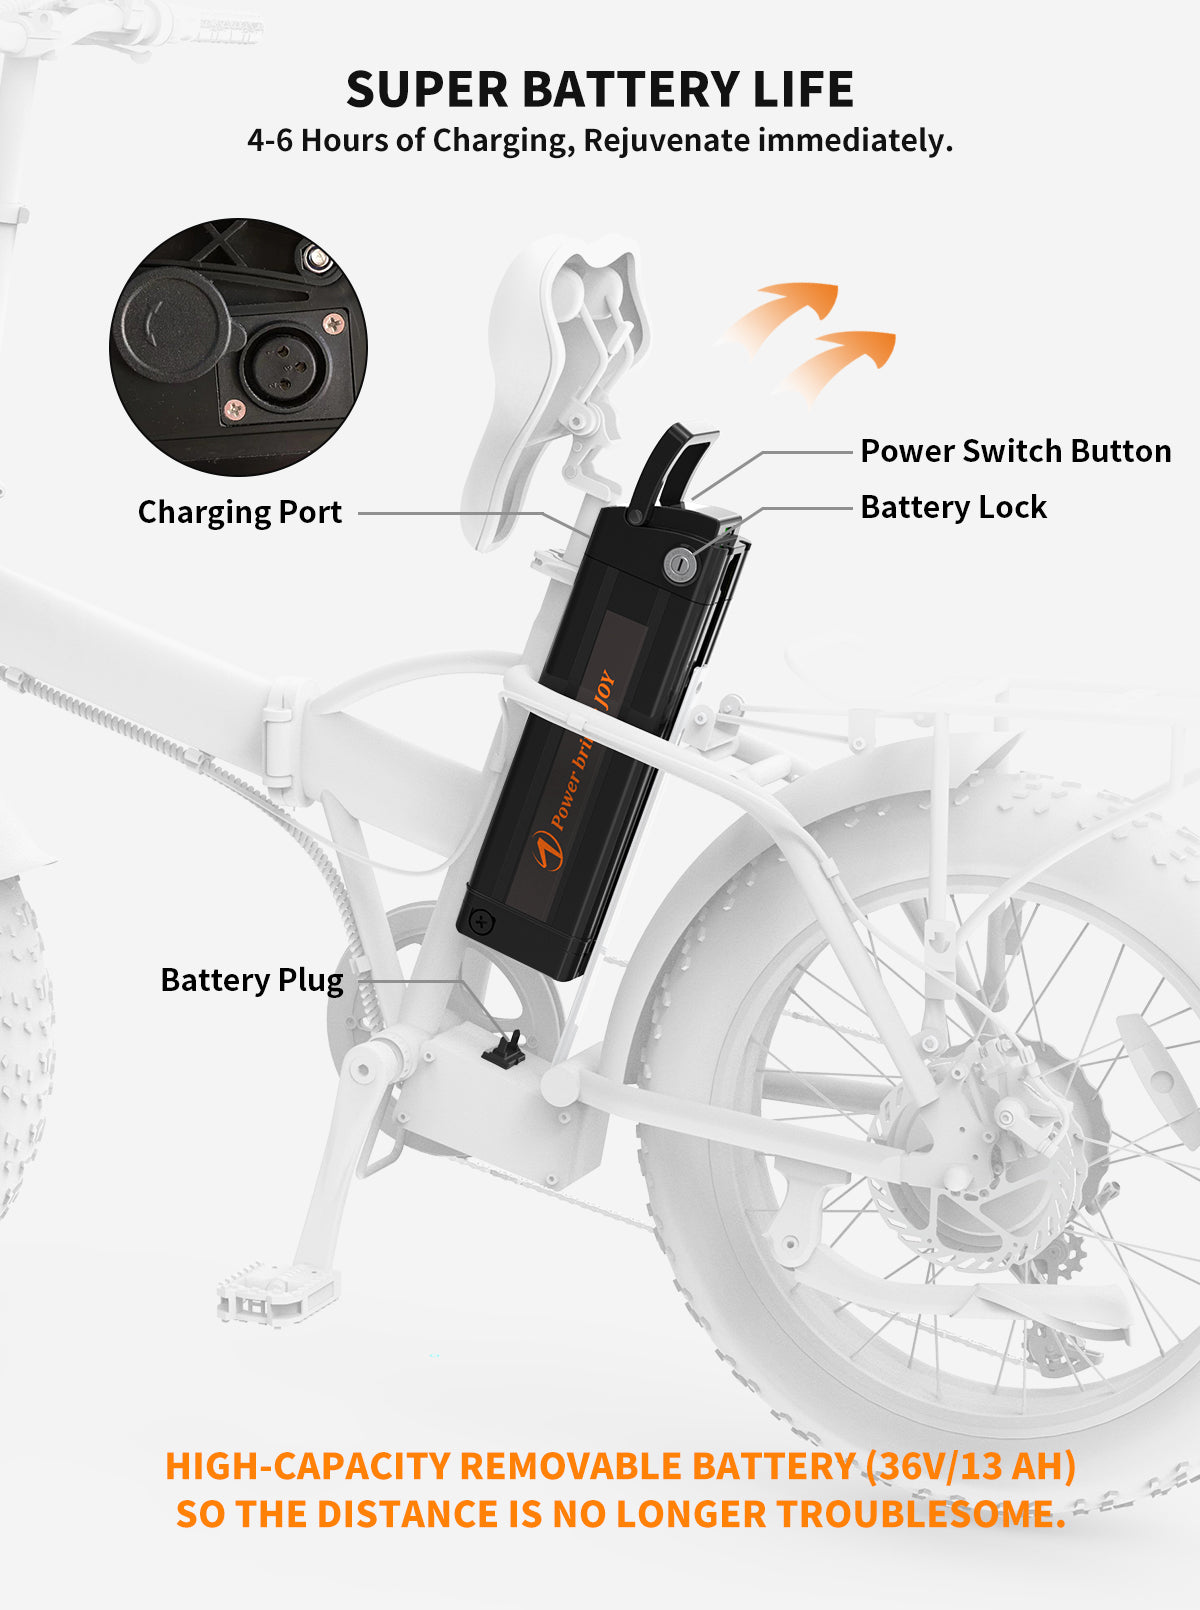 AOSTIRMOTOR Folding Electric Bicycle 500W Motor 20" Fat Tire With 36V/13Ah Li-Battery